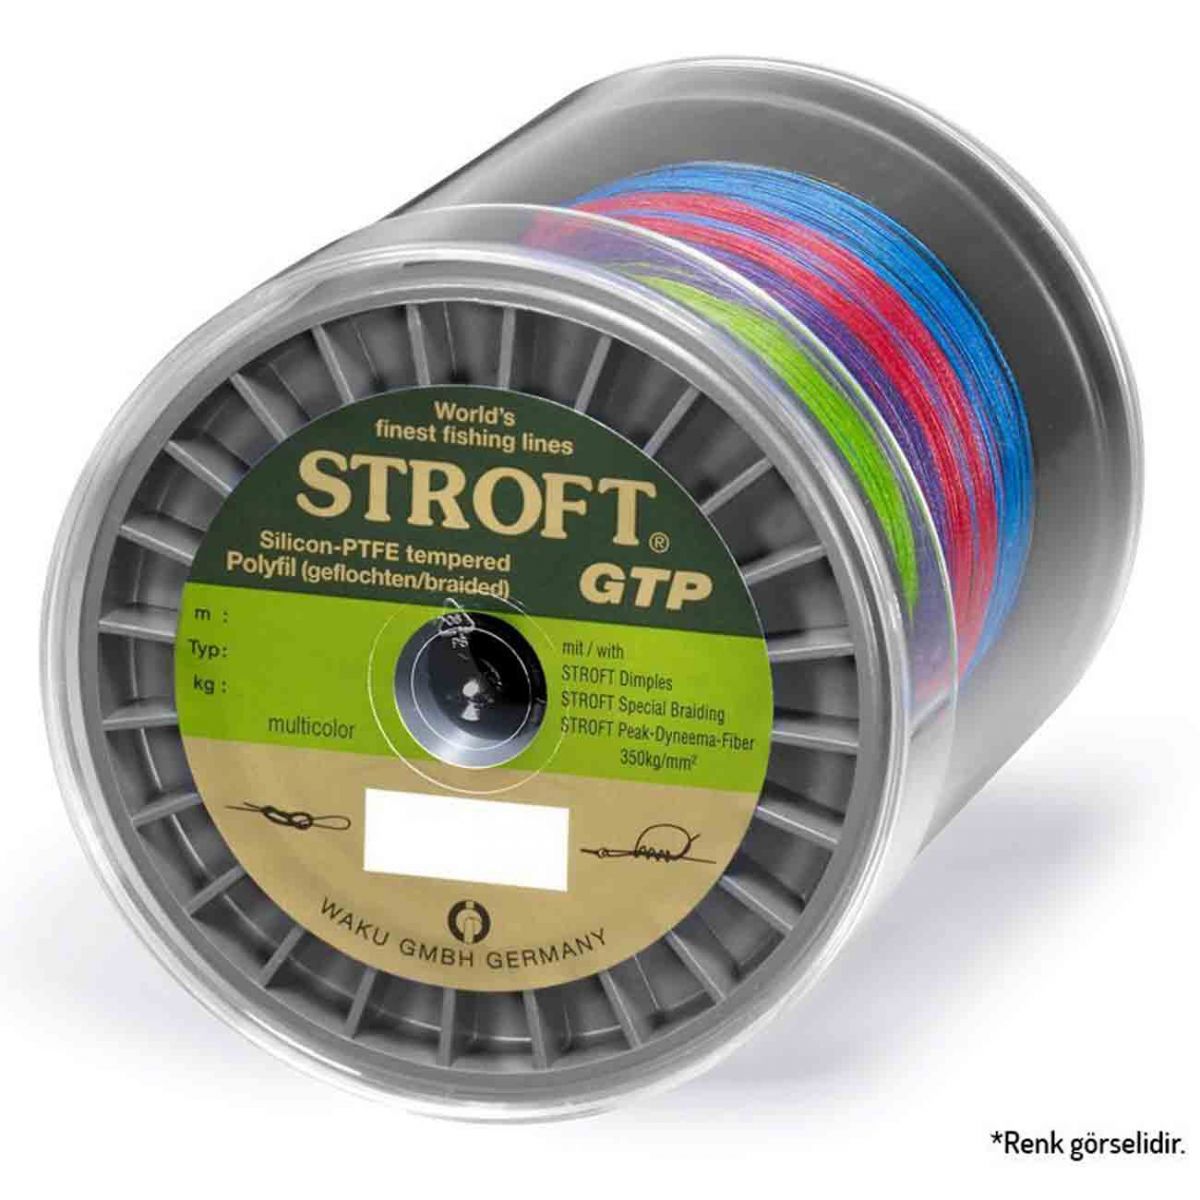 Stroft Gtp Typ E İp Misina Ebruli(Multicolor) Renk 600 Metre,almanya üretimli stroft kalitesinde ip misina serisi